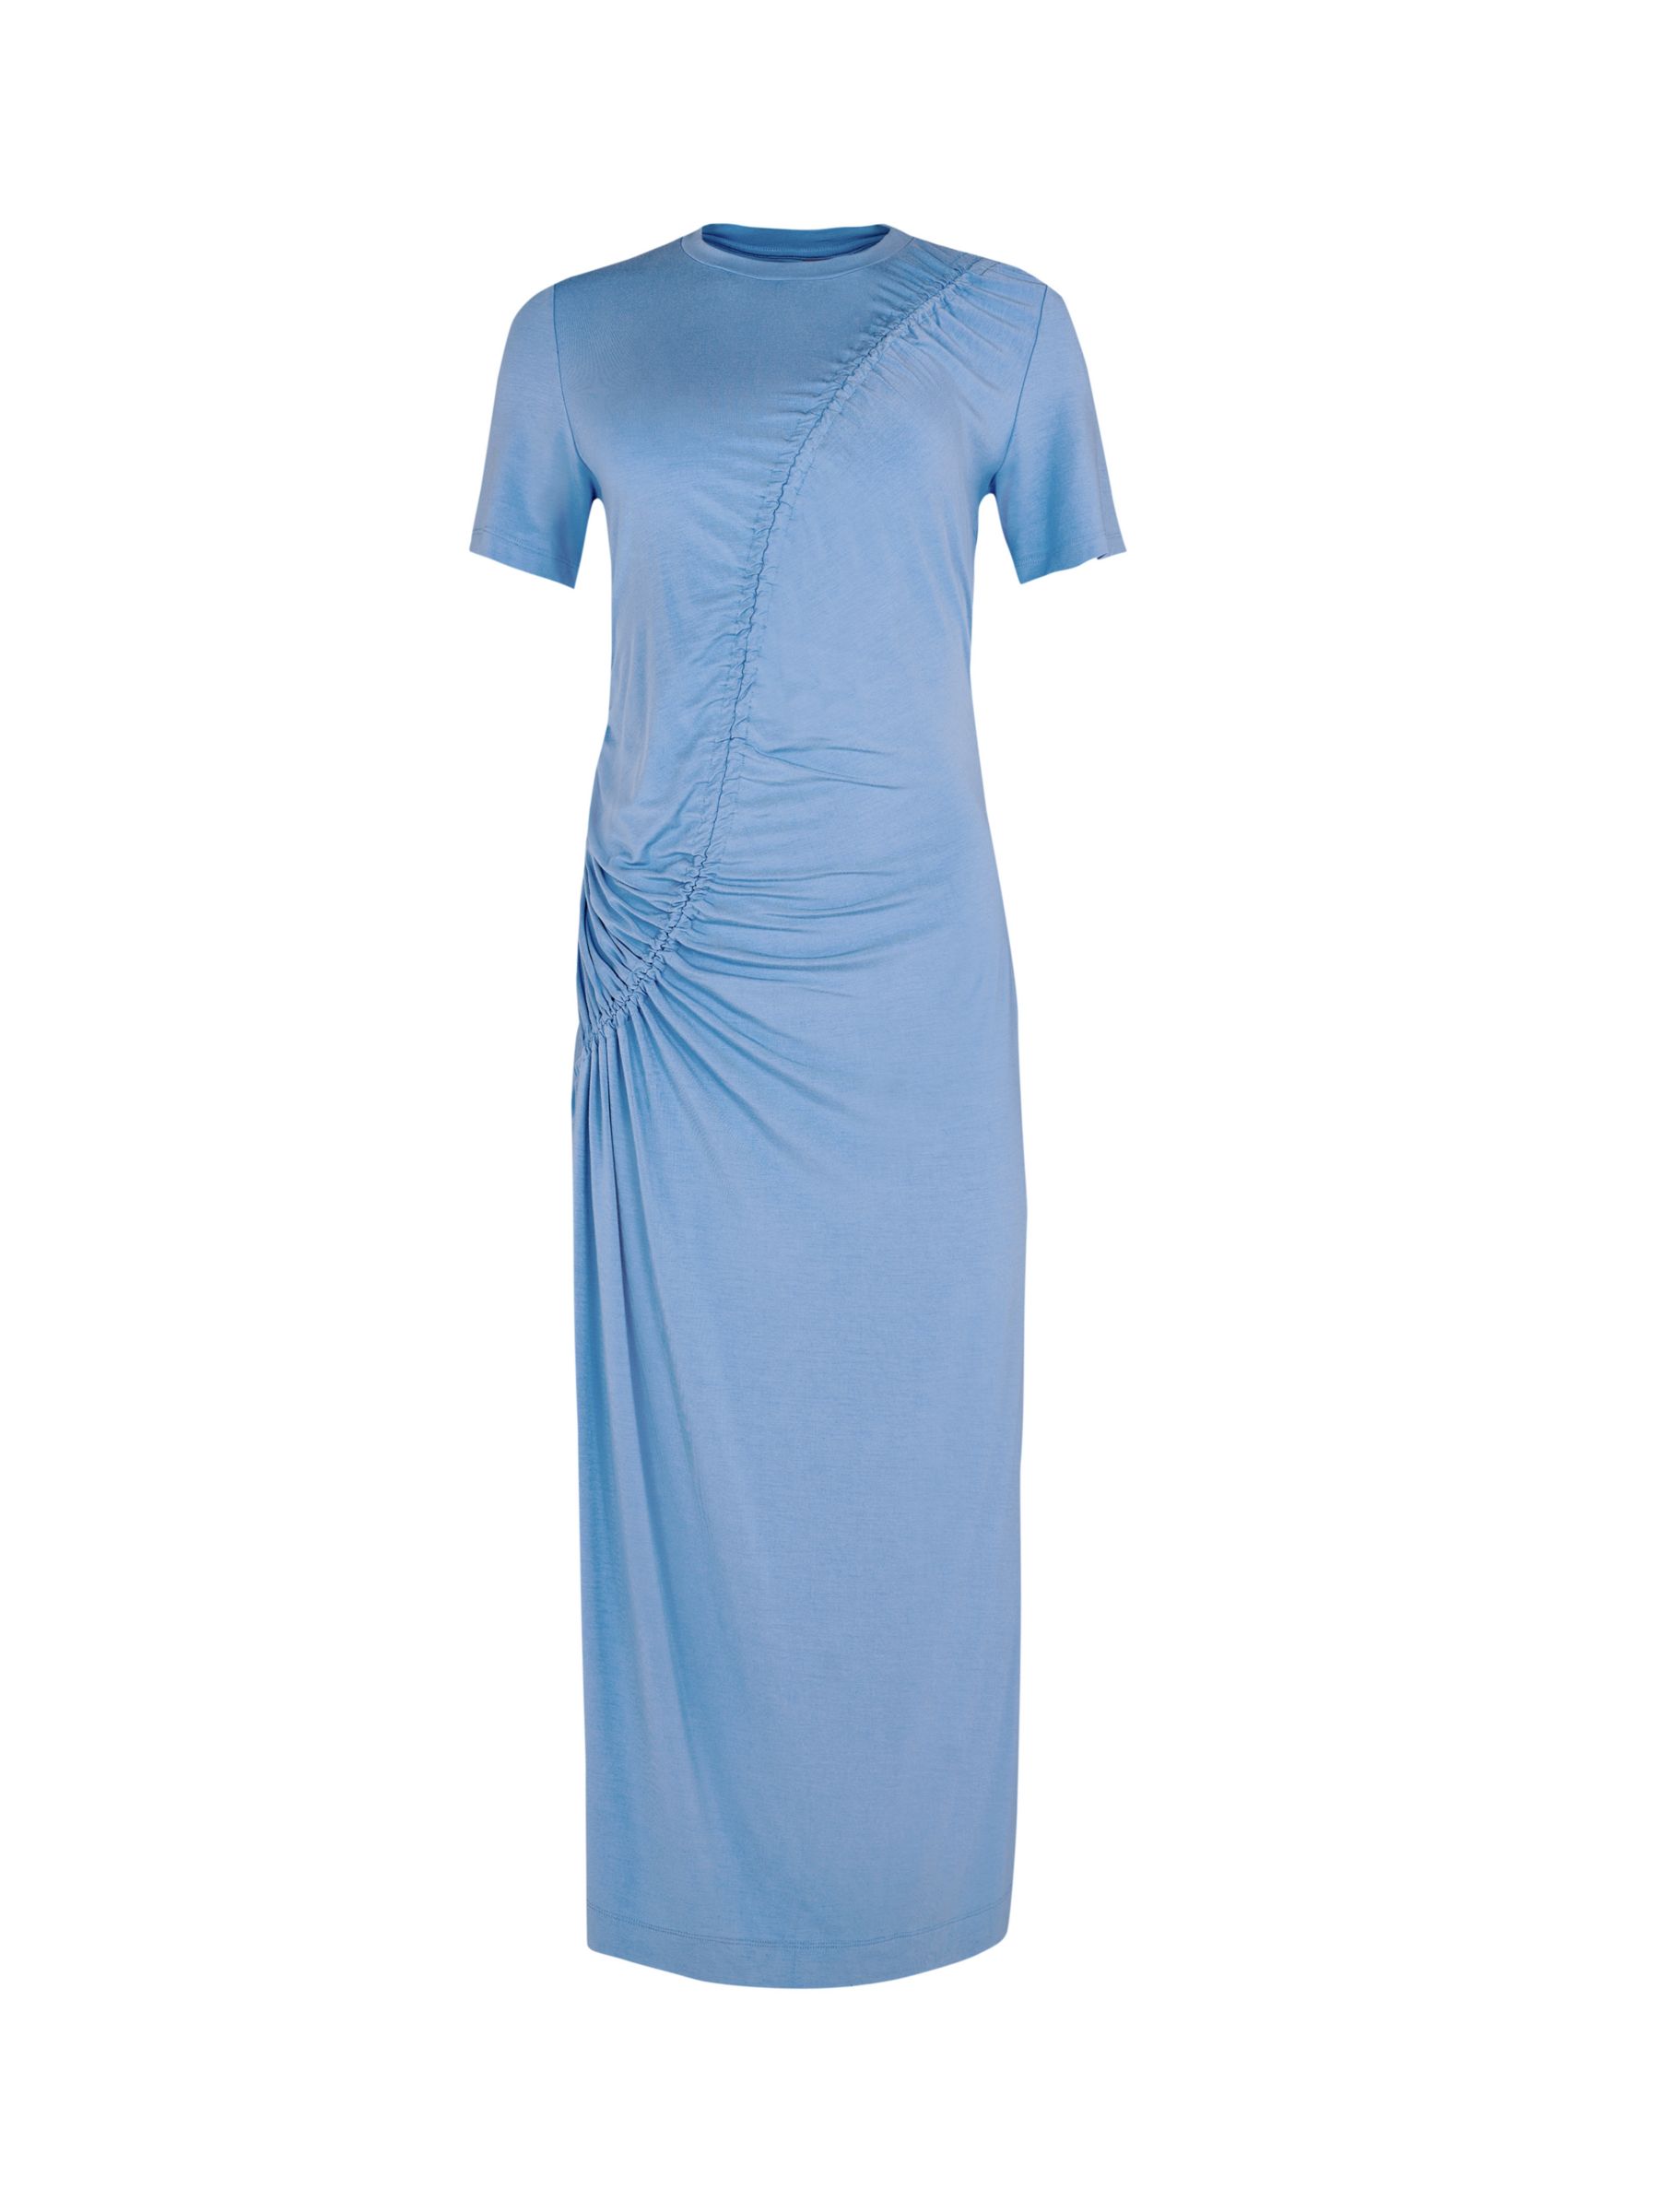 Sweaty Betty Ambience Ruched Midi Dress, Regatta Blue, XXS